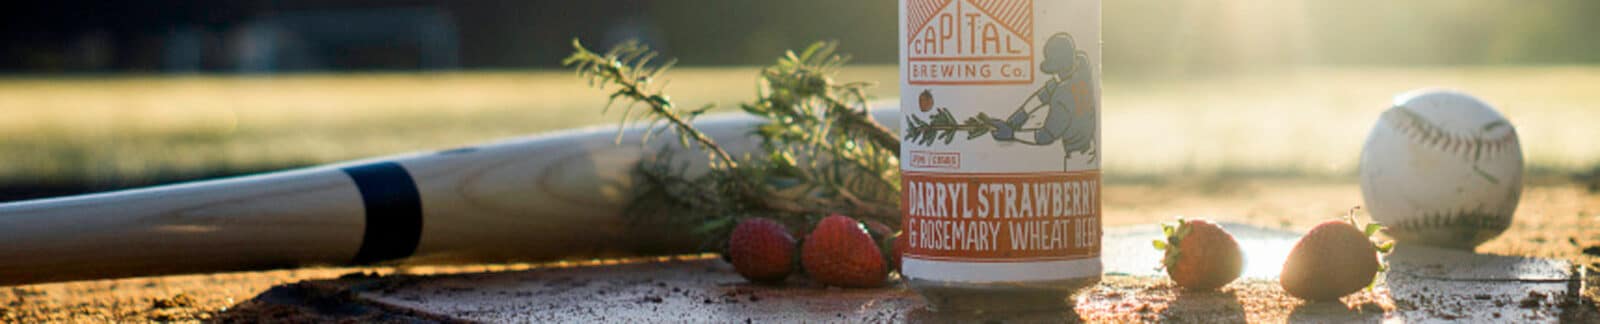 Darryl Strawberry & Rosemary Wheat Beer header